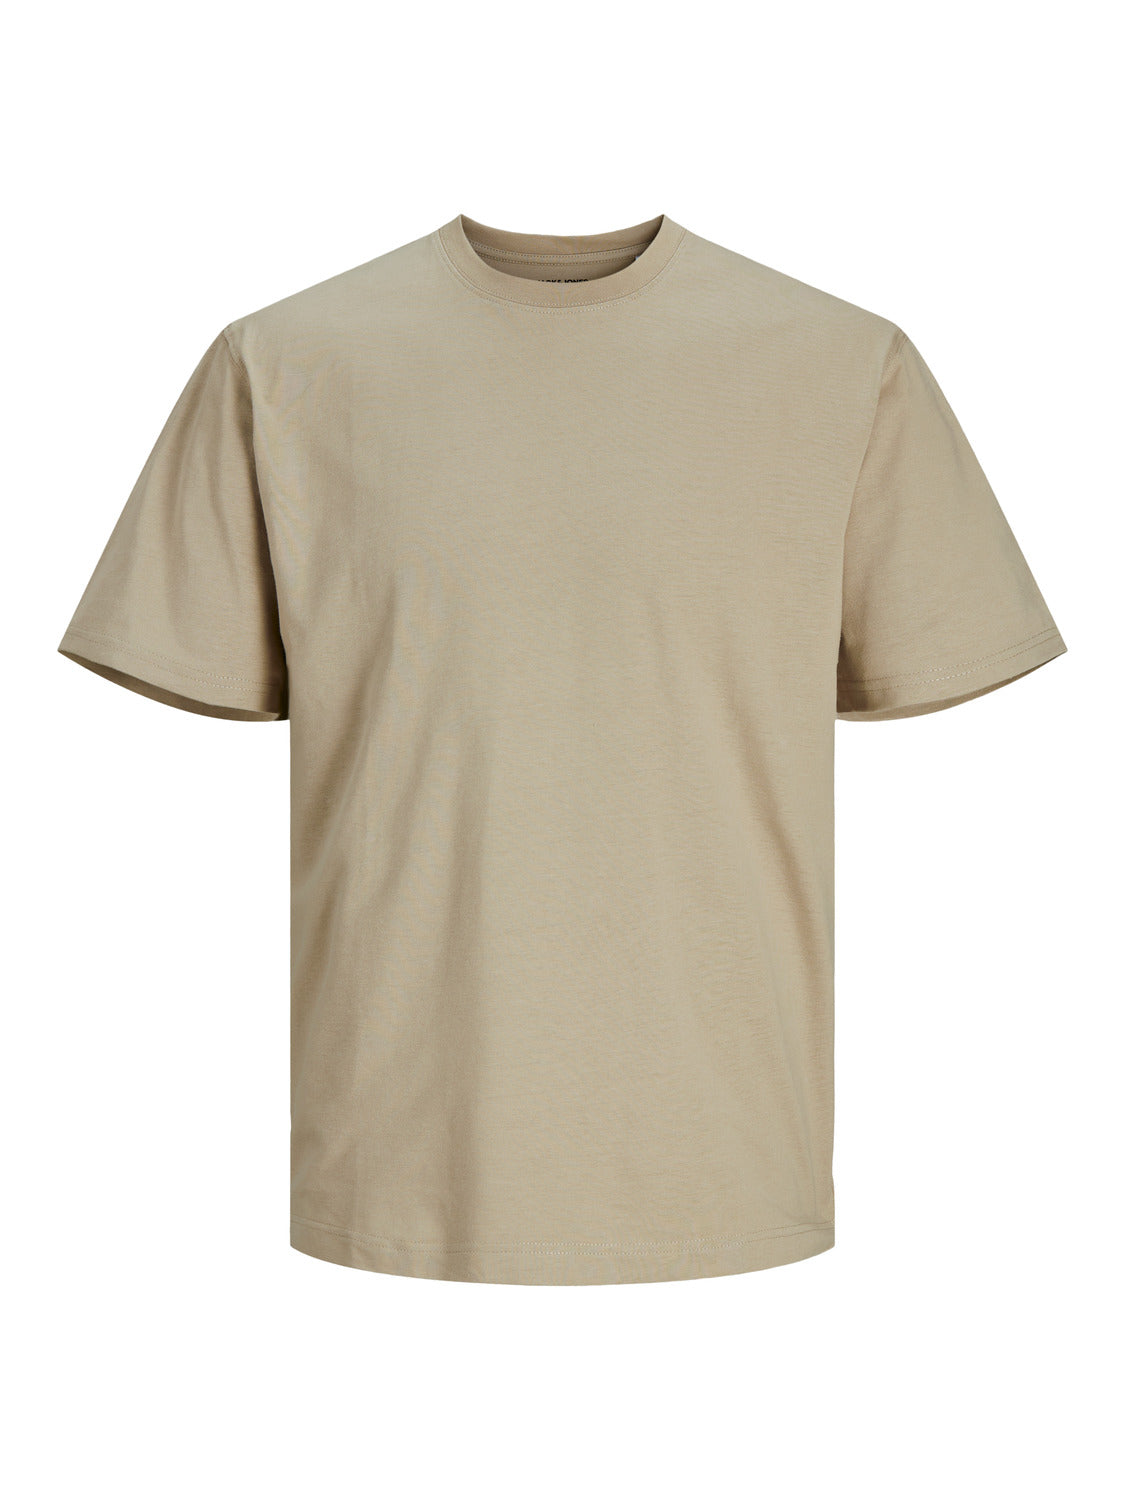 JJERELAXED T-Shirt - Crockery